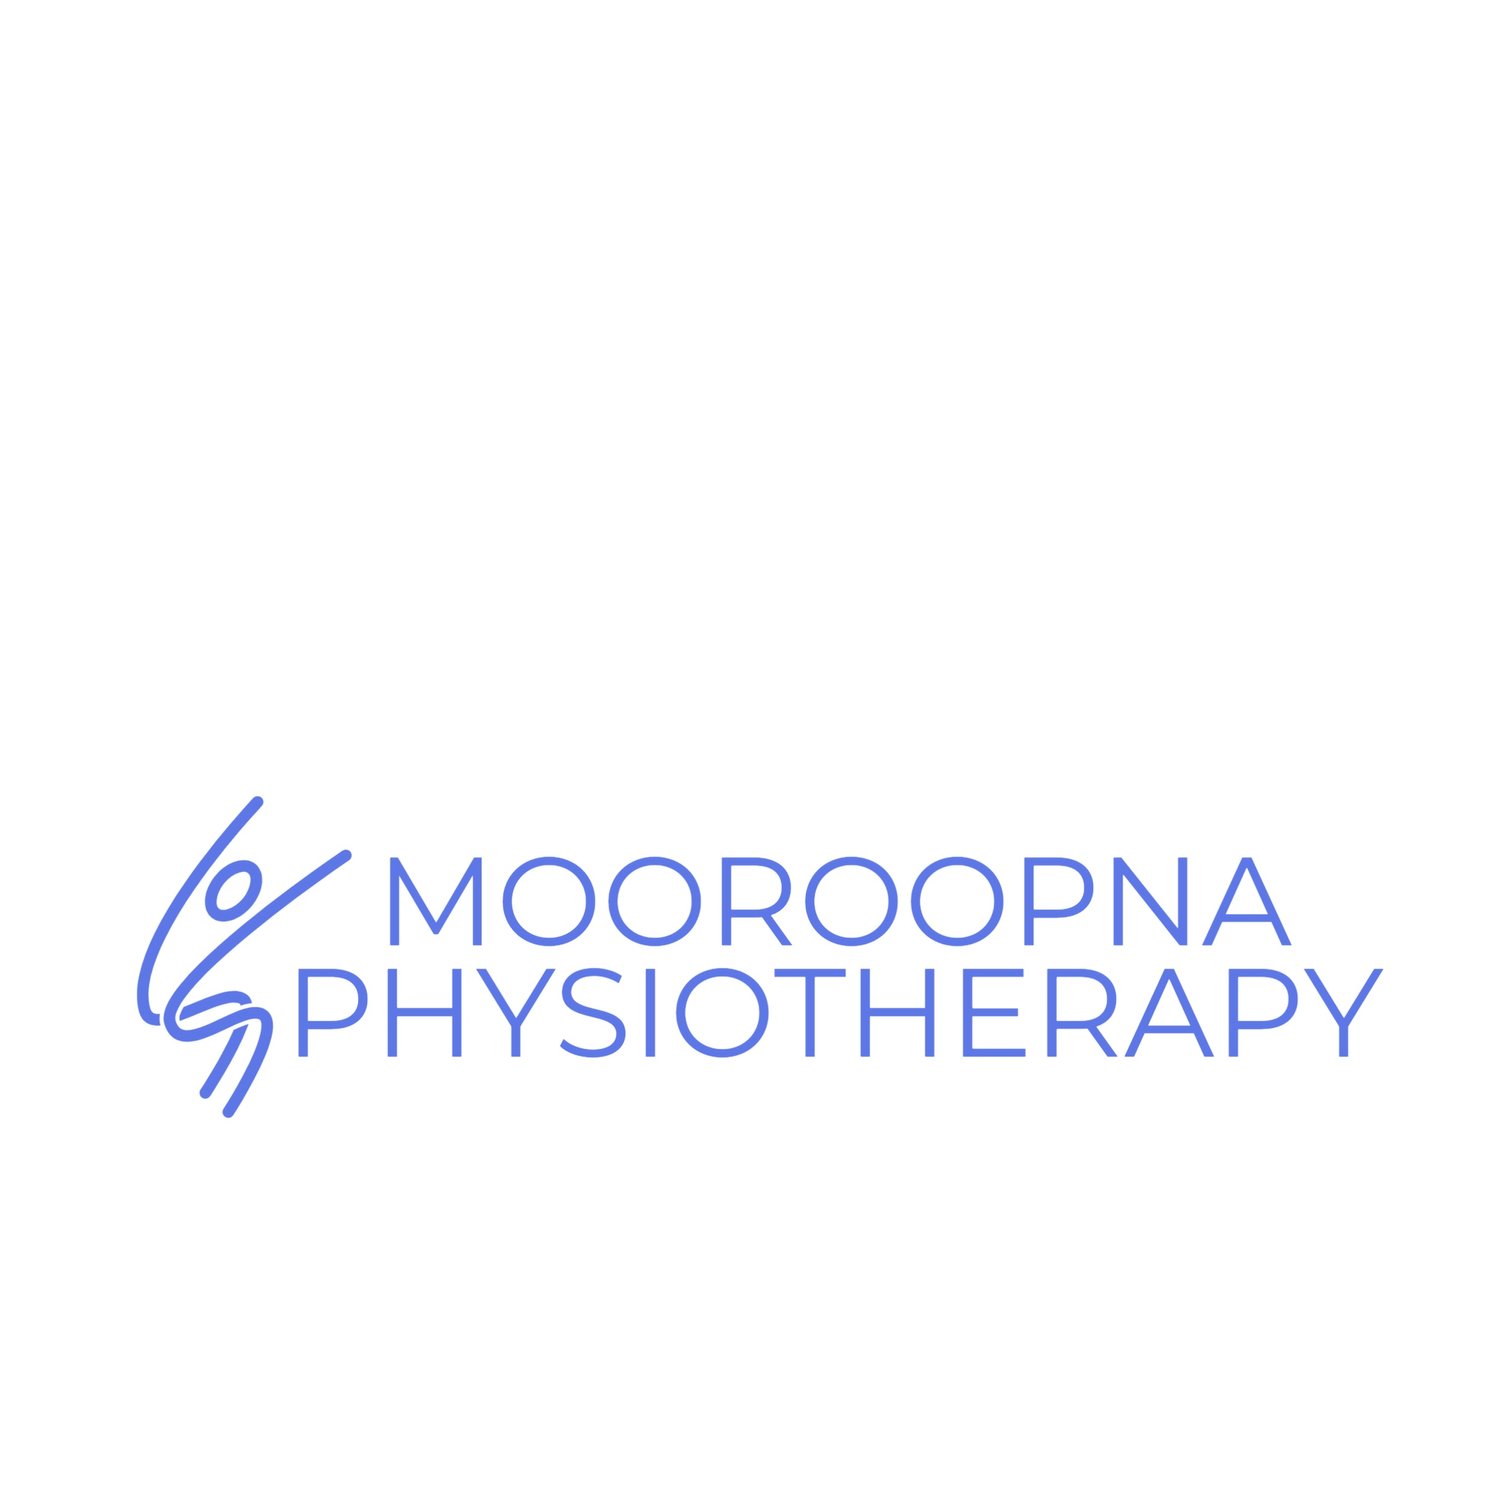 MOOROOPNA PHYSIOTHERAPY